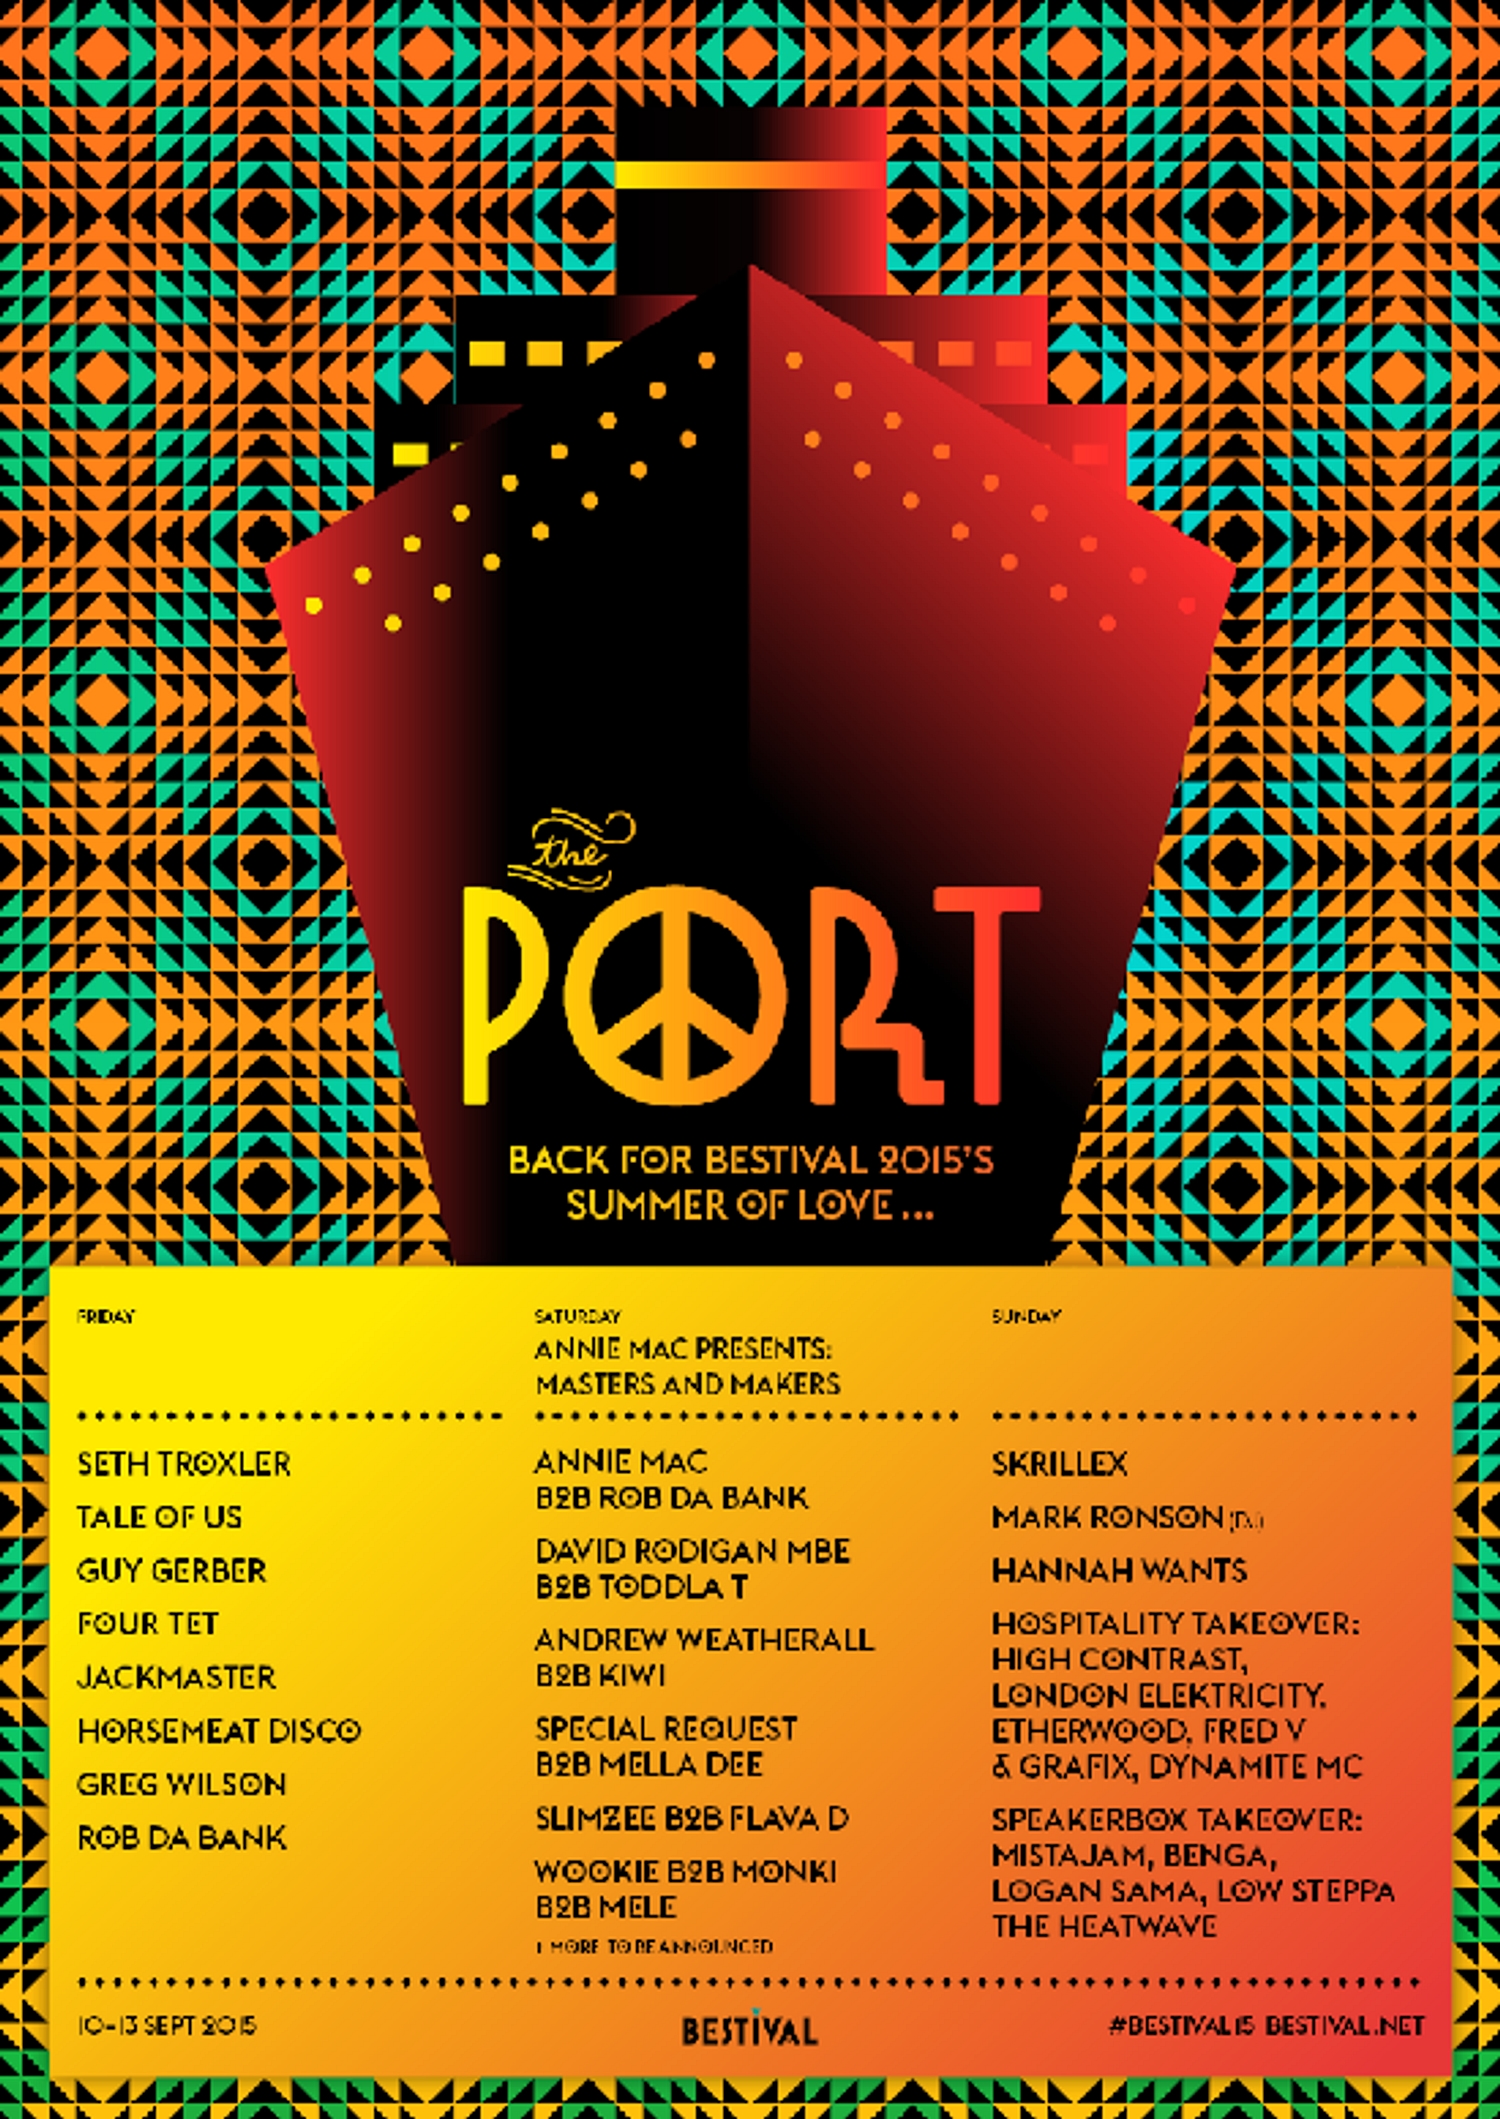 Skrillex, Mark Ronson, Four Tet to play Bestival 2015’s The Port